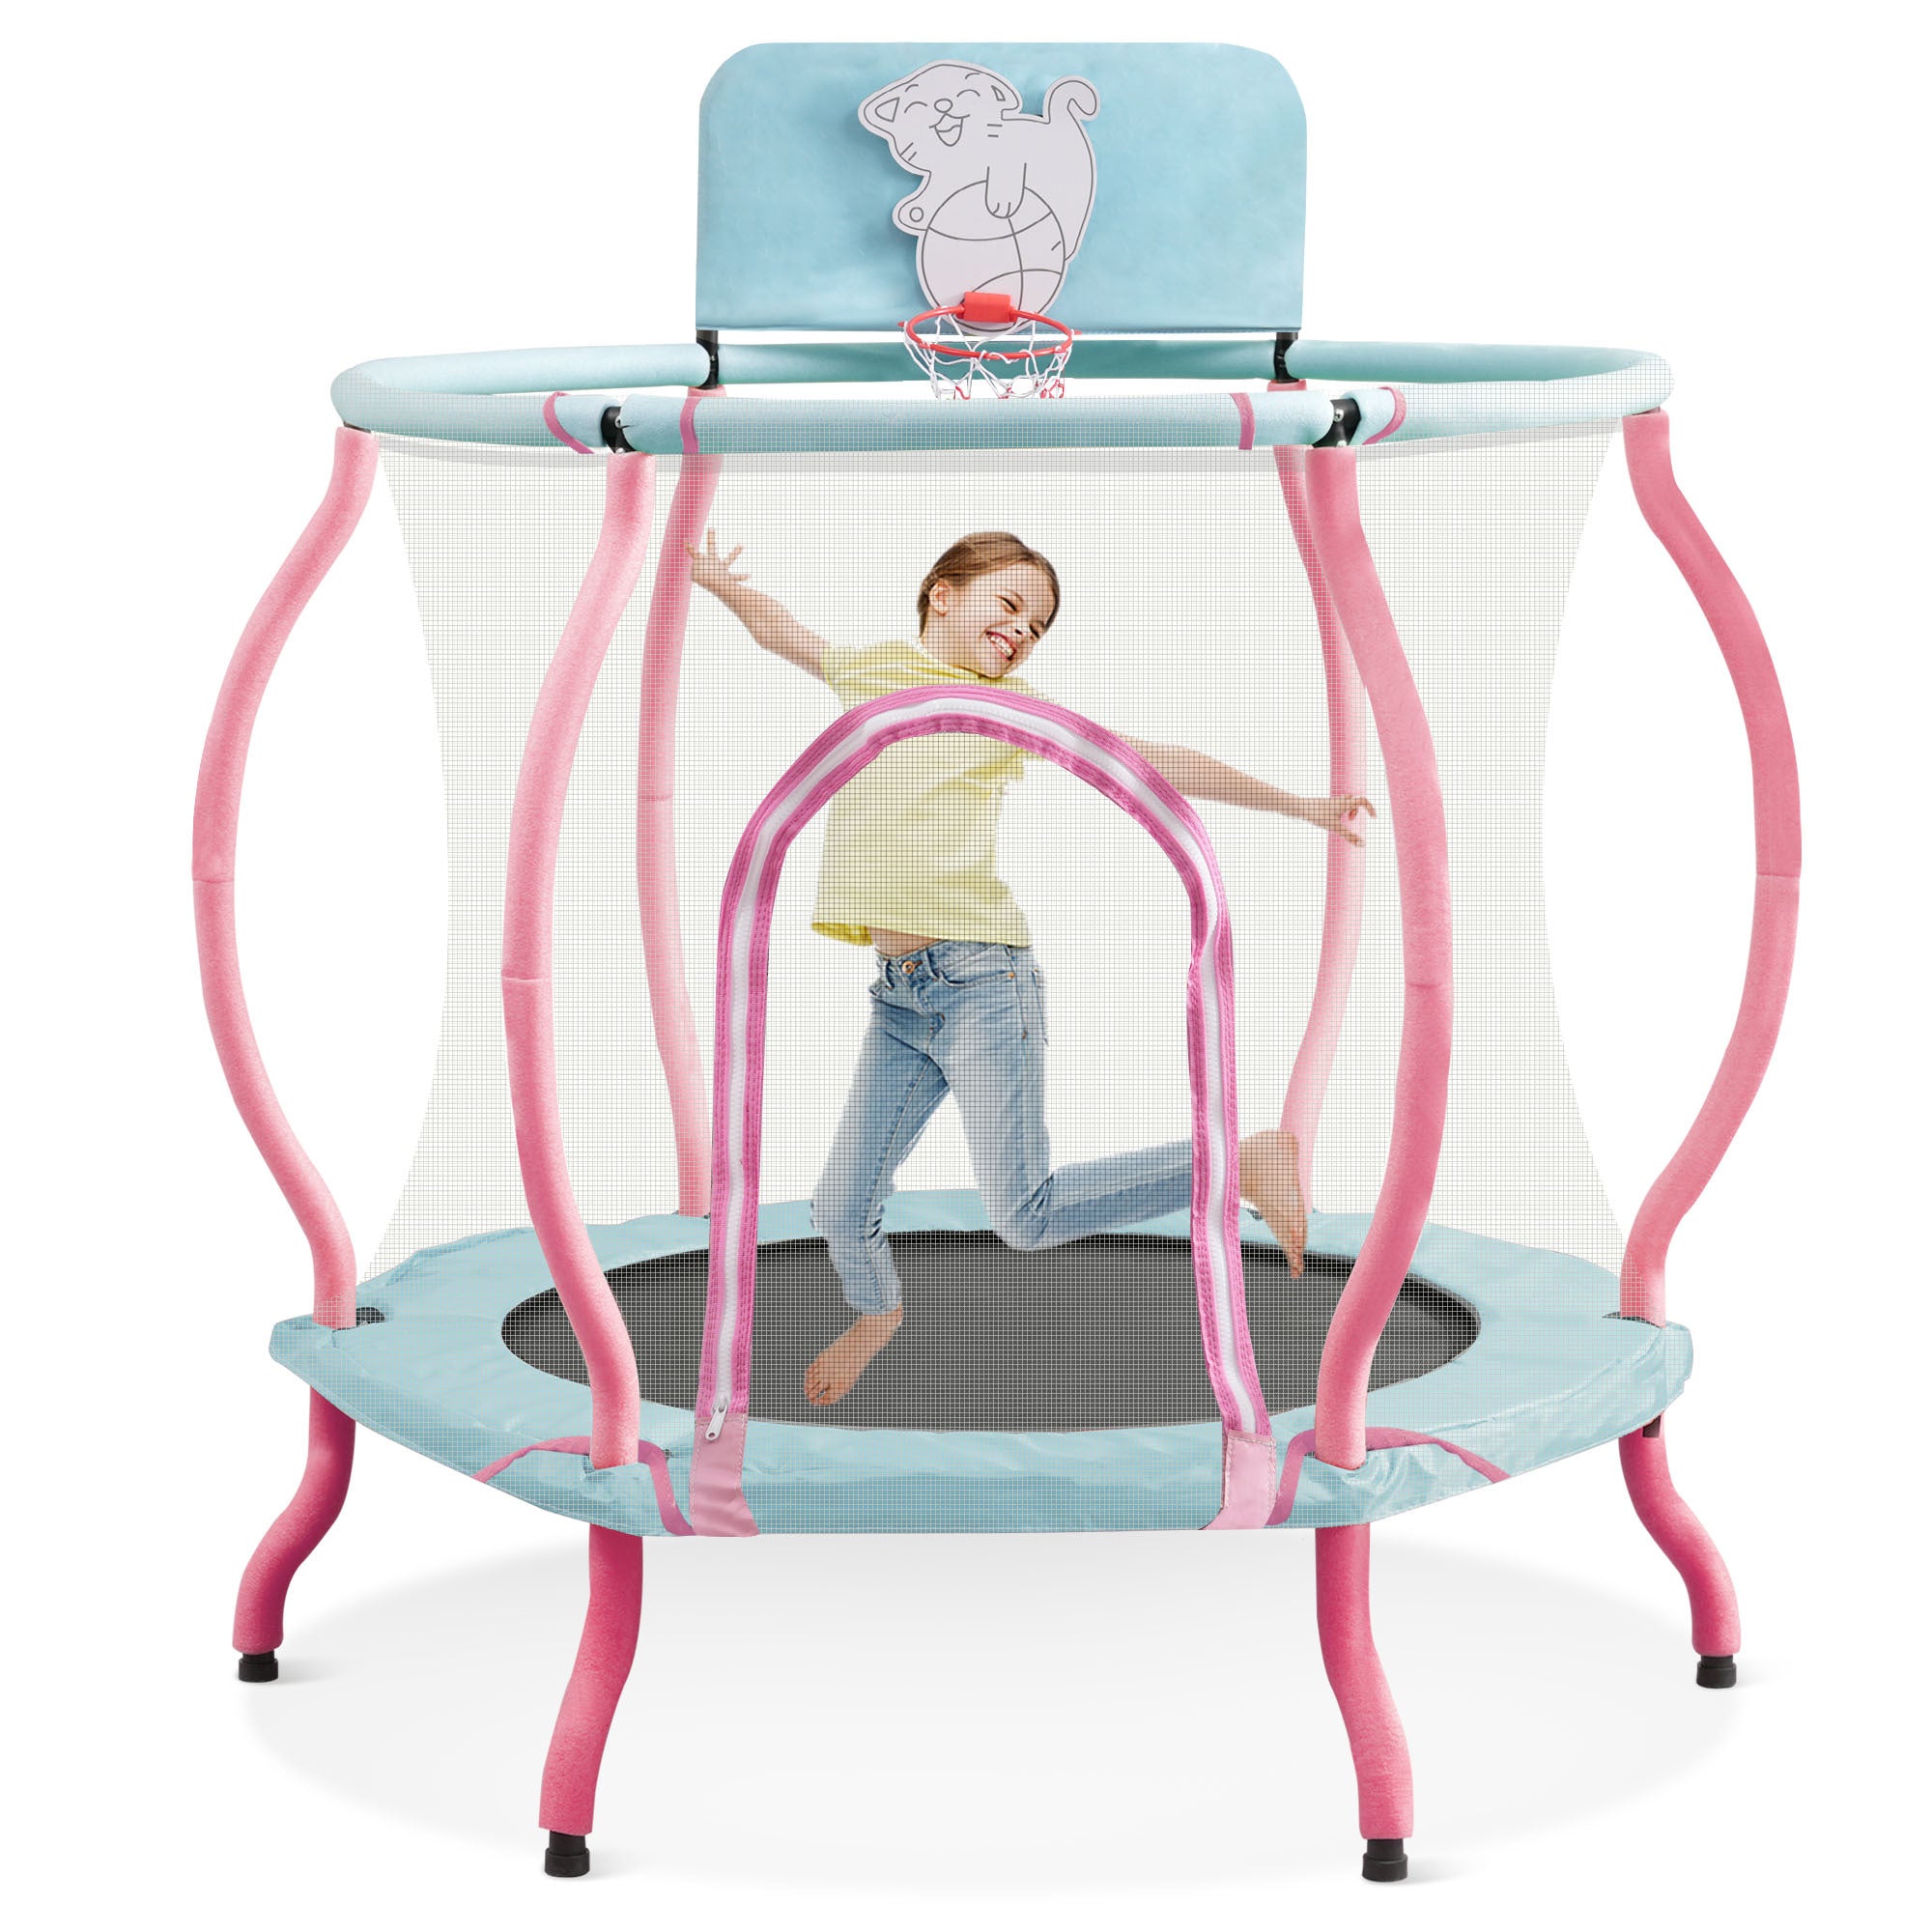 4FT Trampoline for Kids 48" Indoor Mini Toddler baby blue-metal